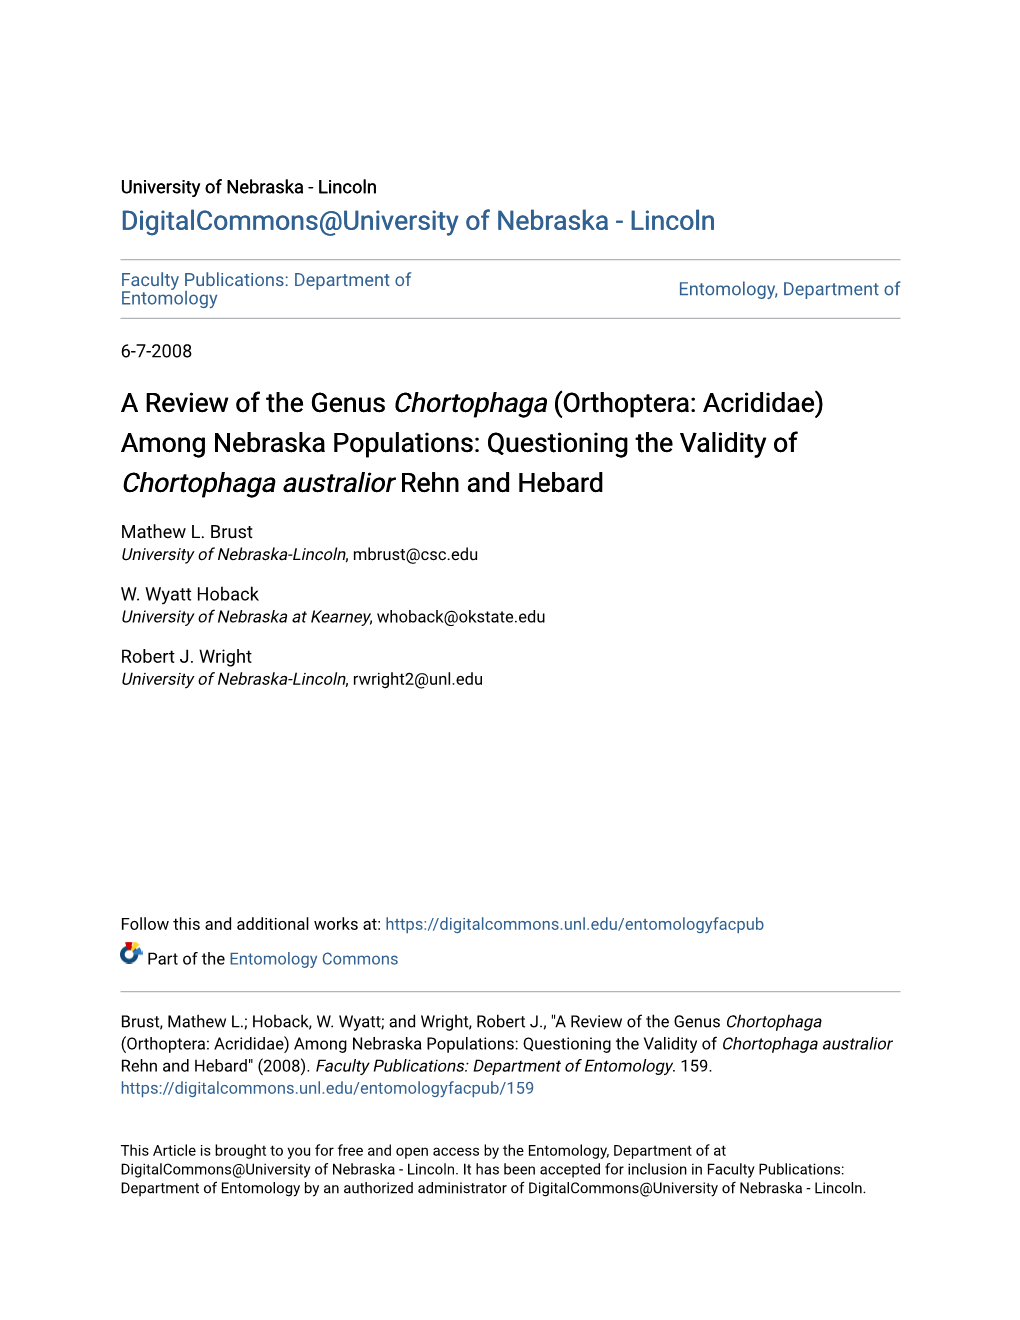 A Review of the Genus &lt;I&gt;Chortophaga &lt;/I&gt; (Orthoptera